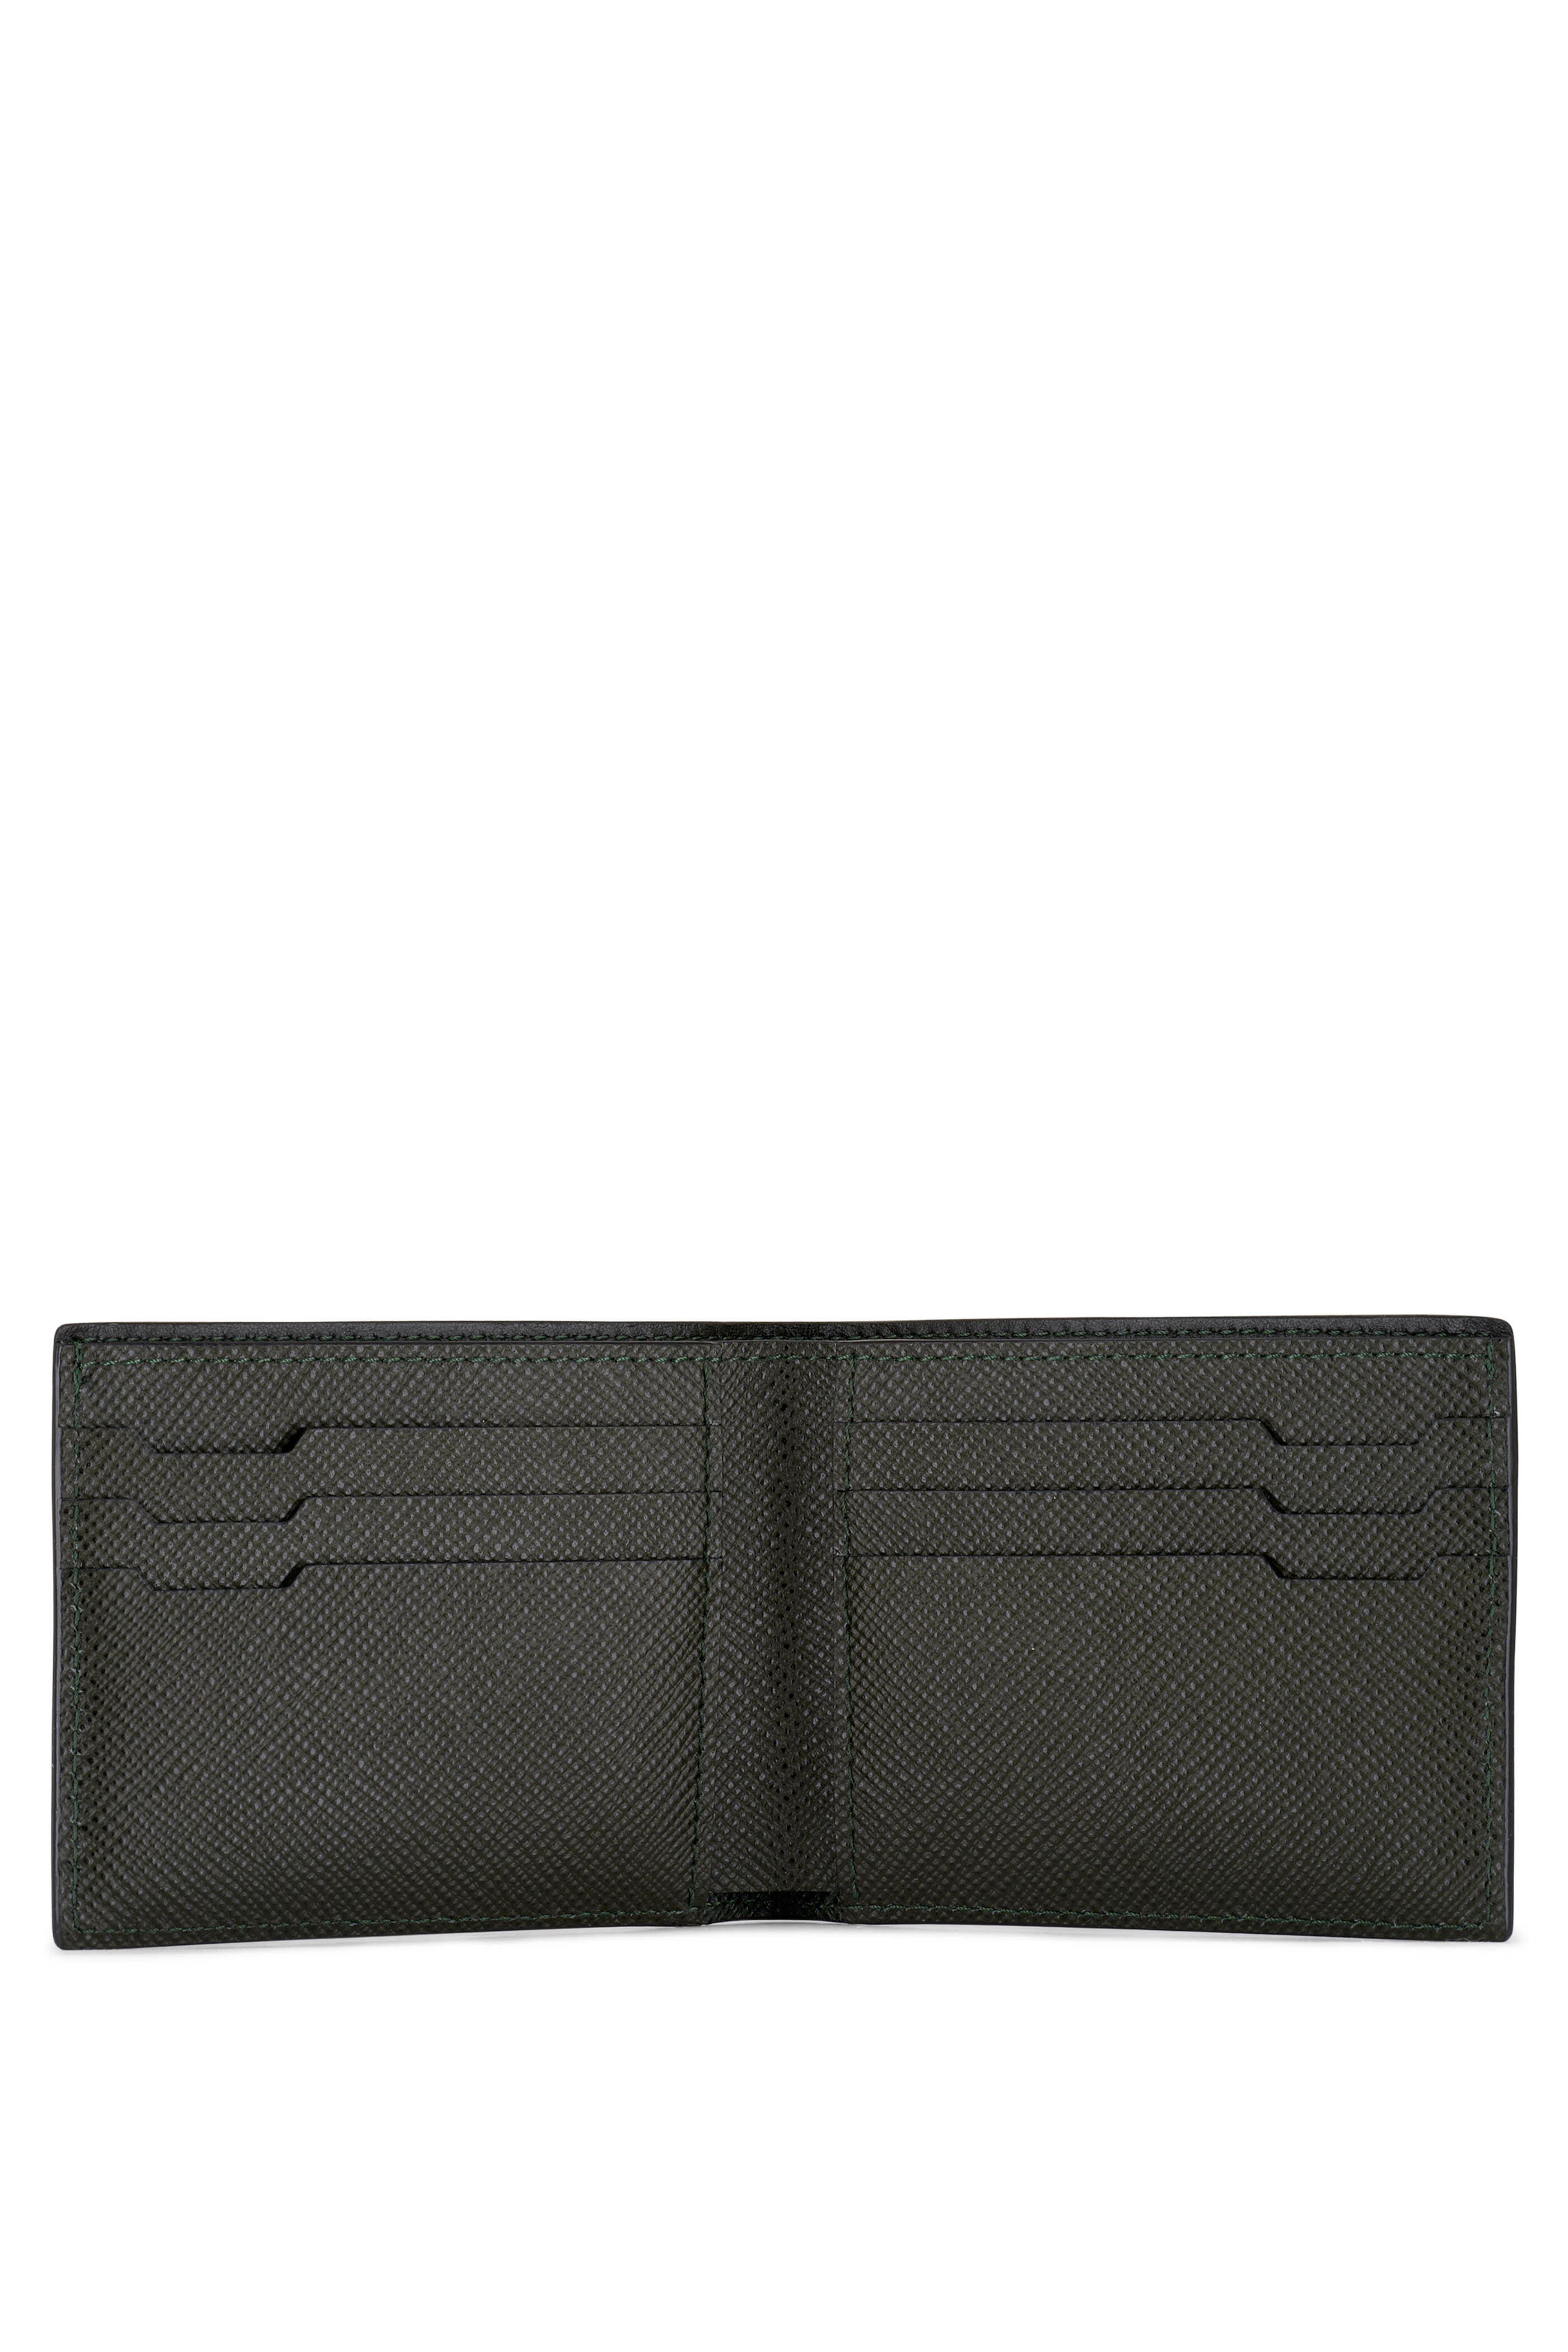 Tom Ford - Green Camo Leather Bi-Fold Wallet